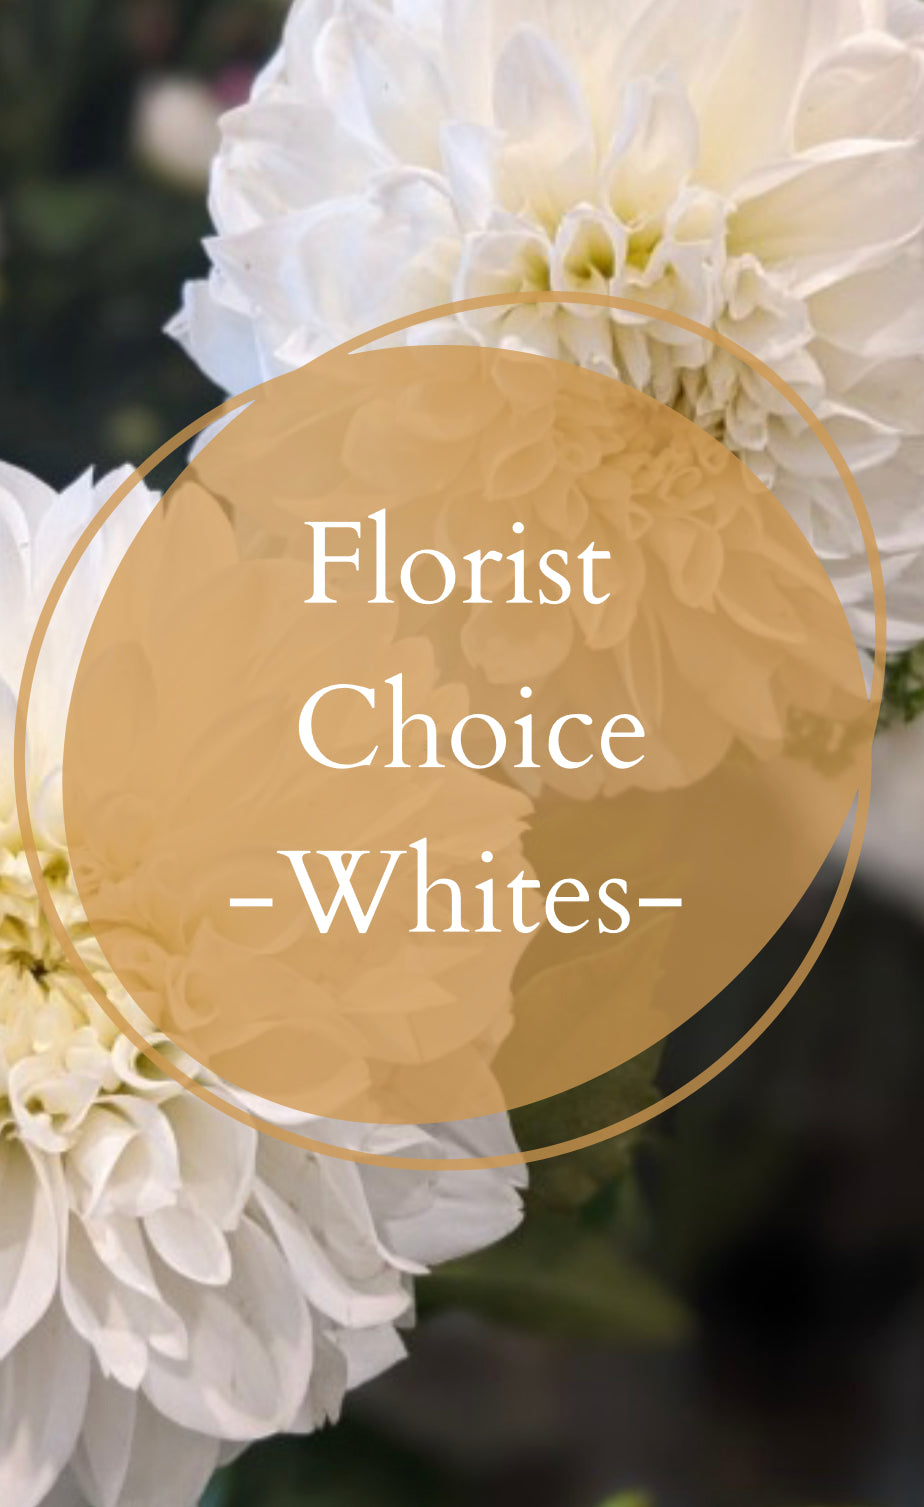 Florist Choice - Whites